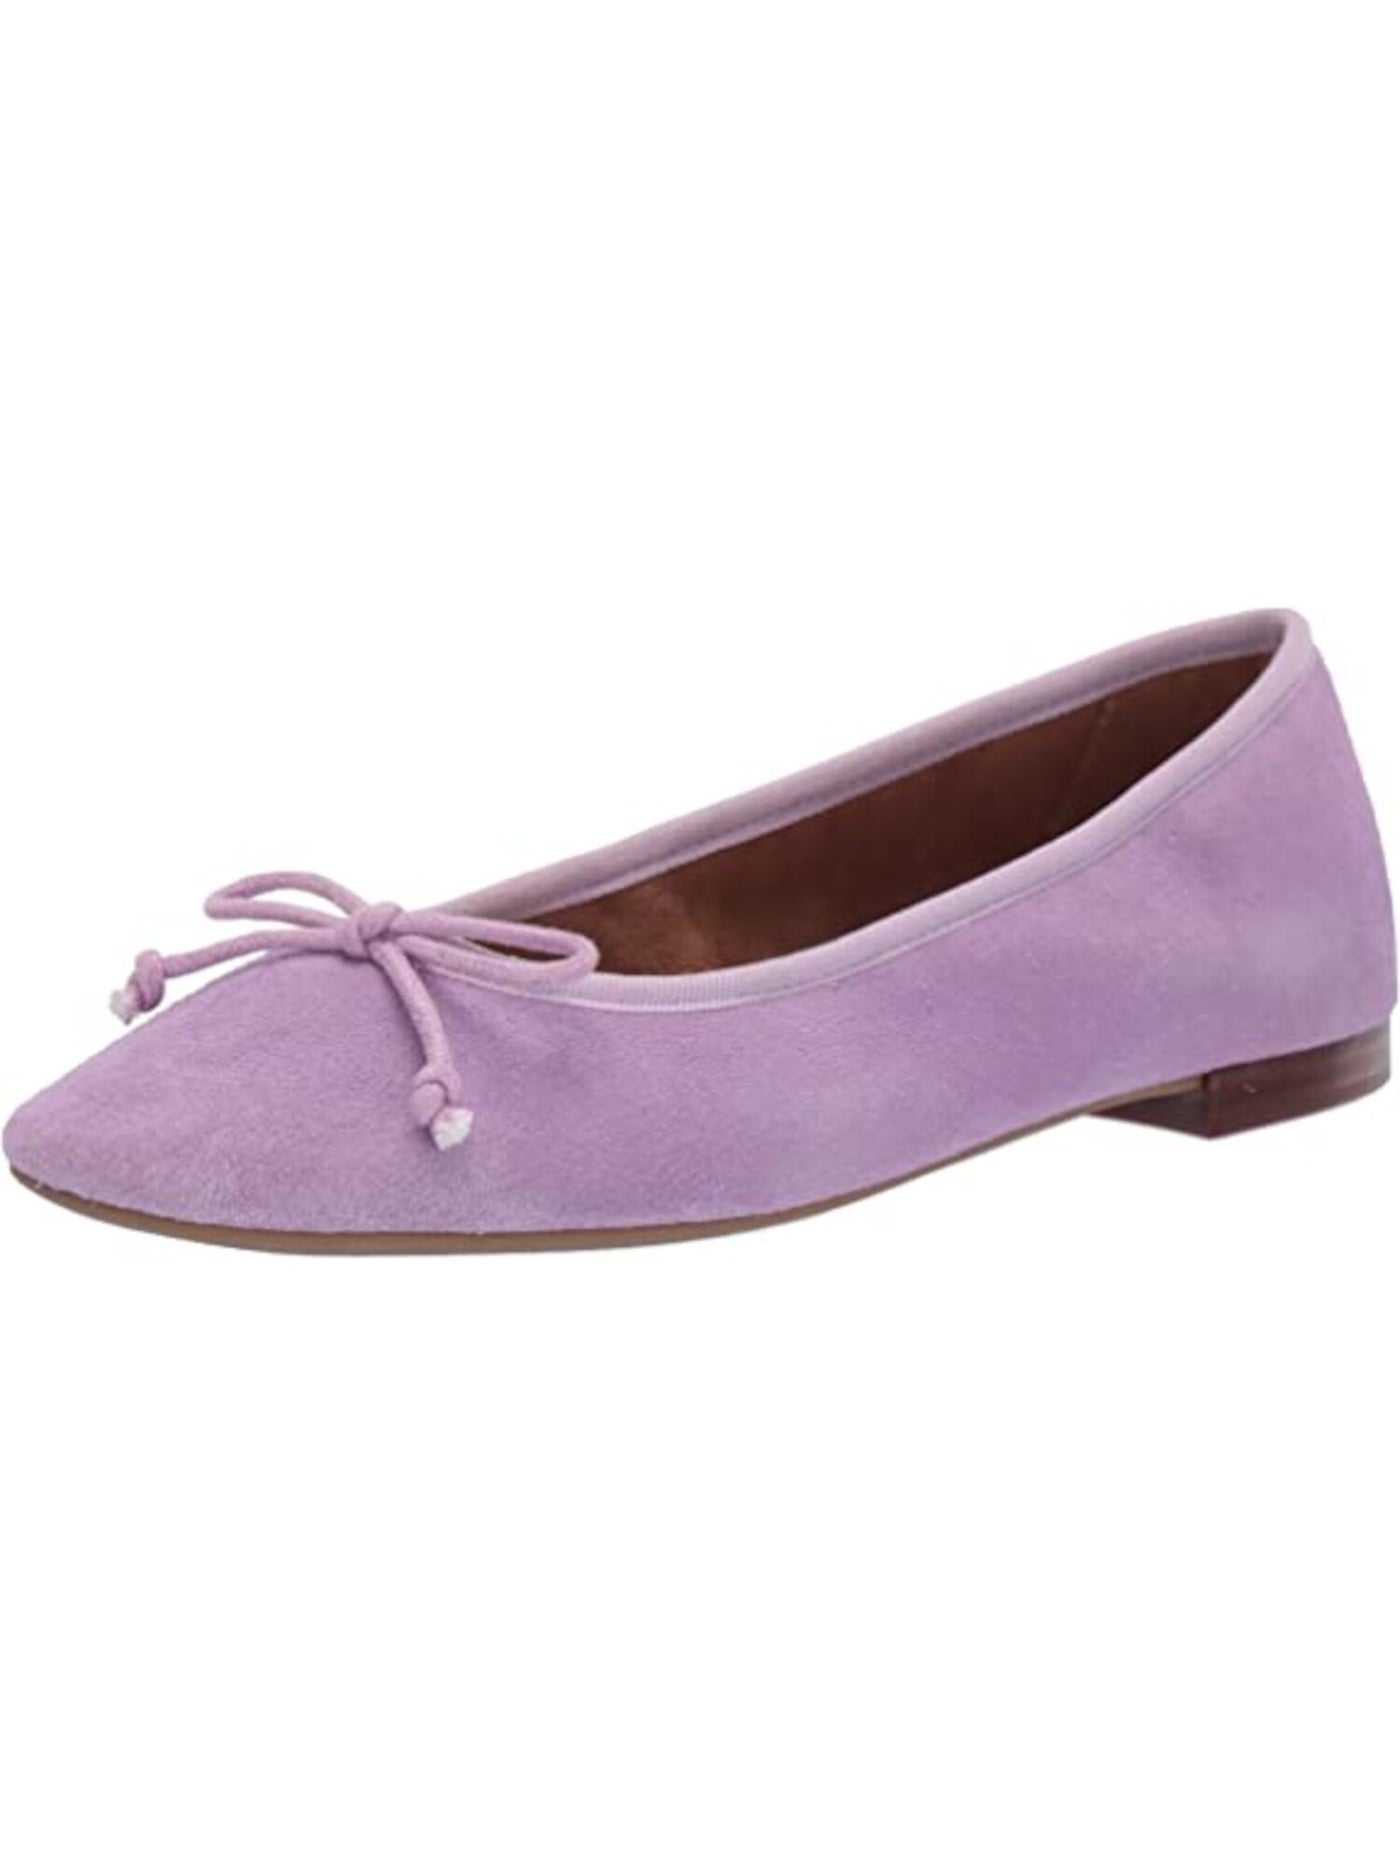 AEROSOLES MARTHA STEWART Womens Purple Bow Accent Padded Homerun Round Toe Slip On Leather Dress Flats Shoes 6 W